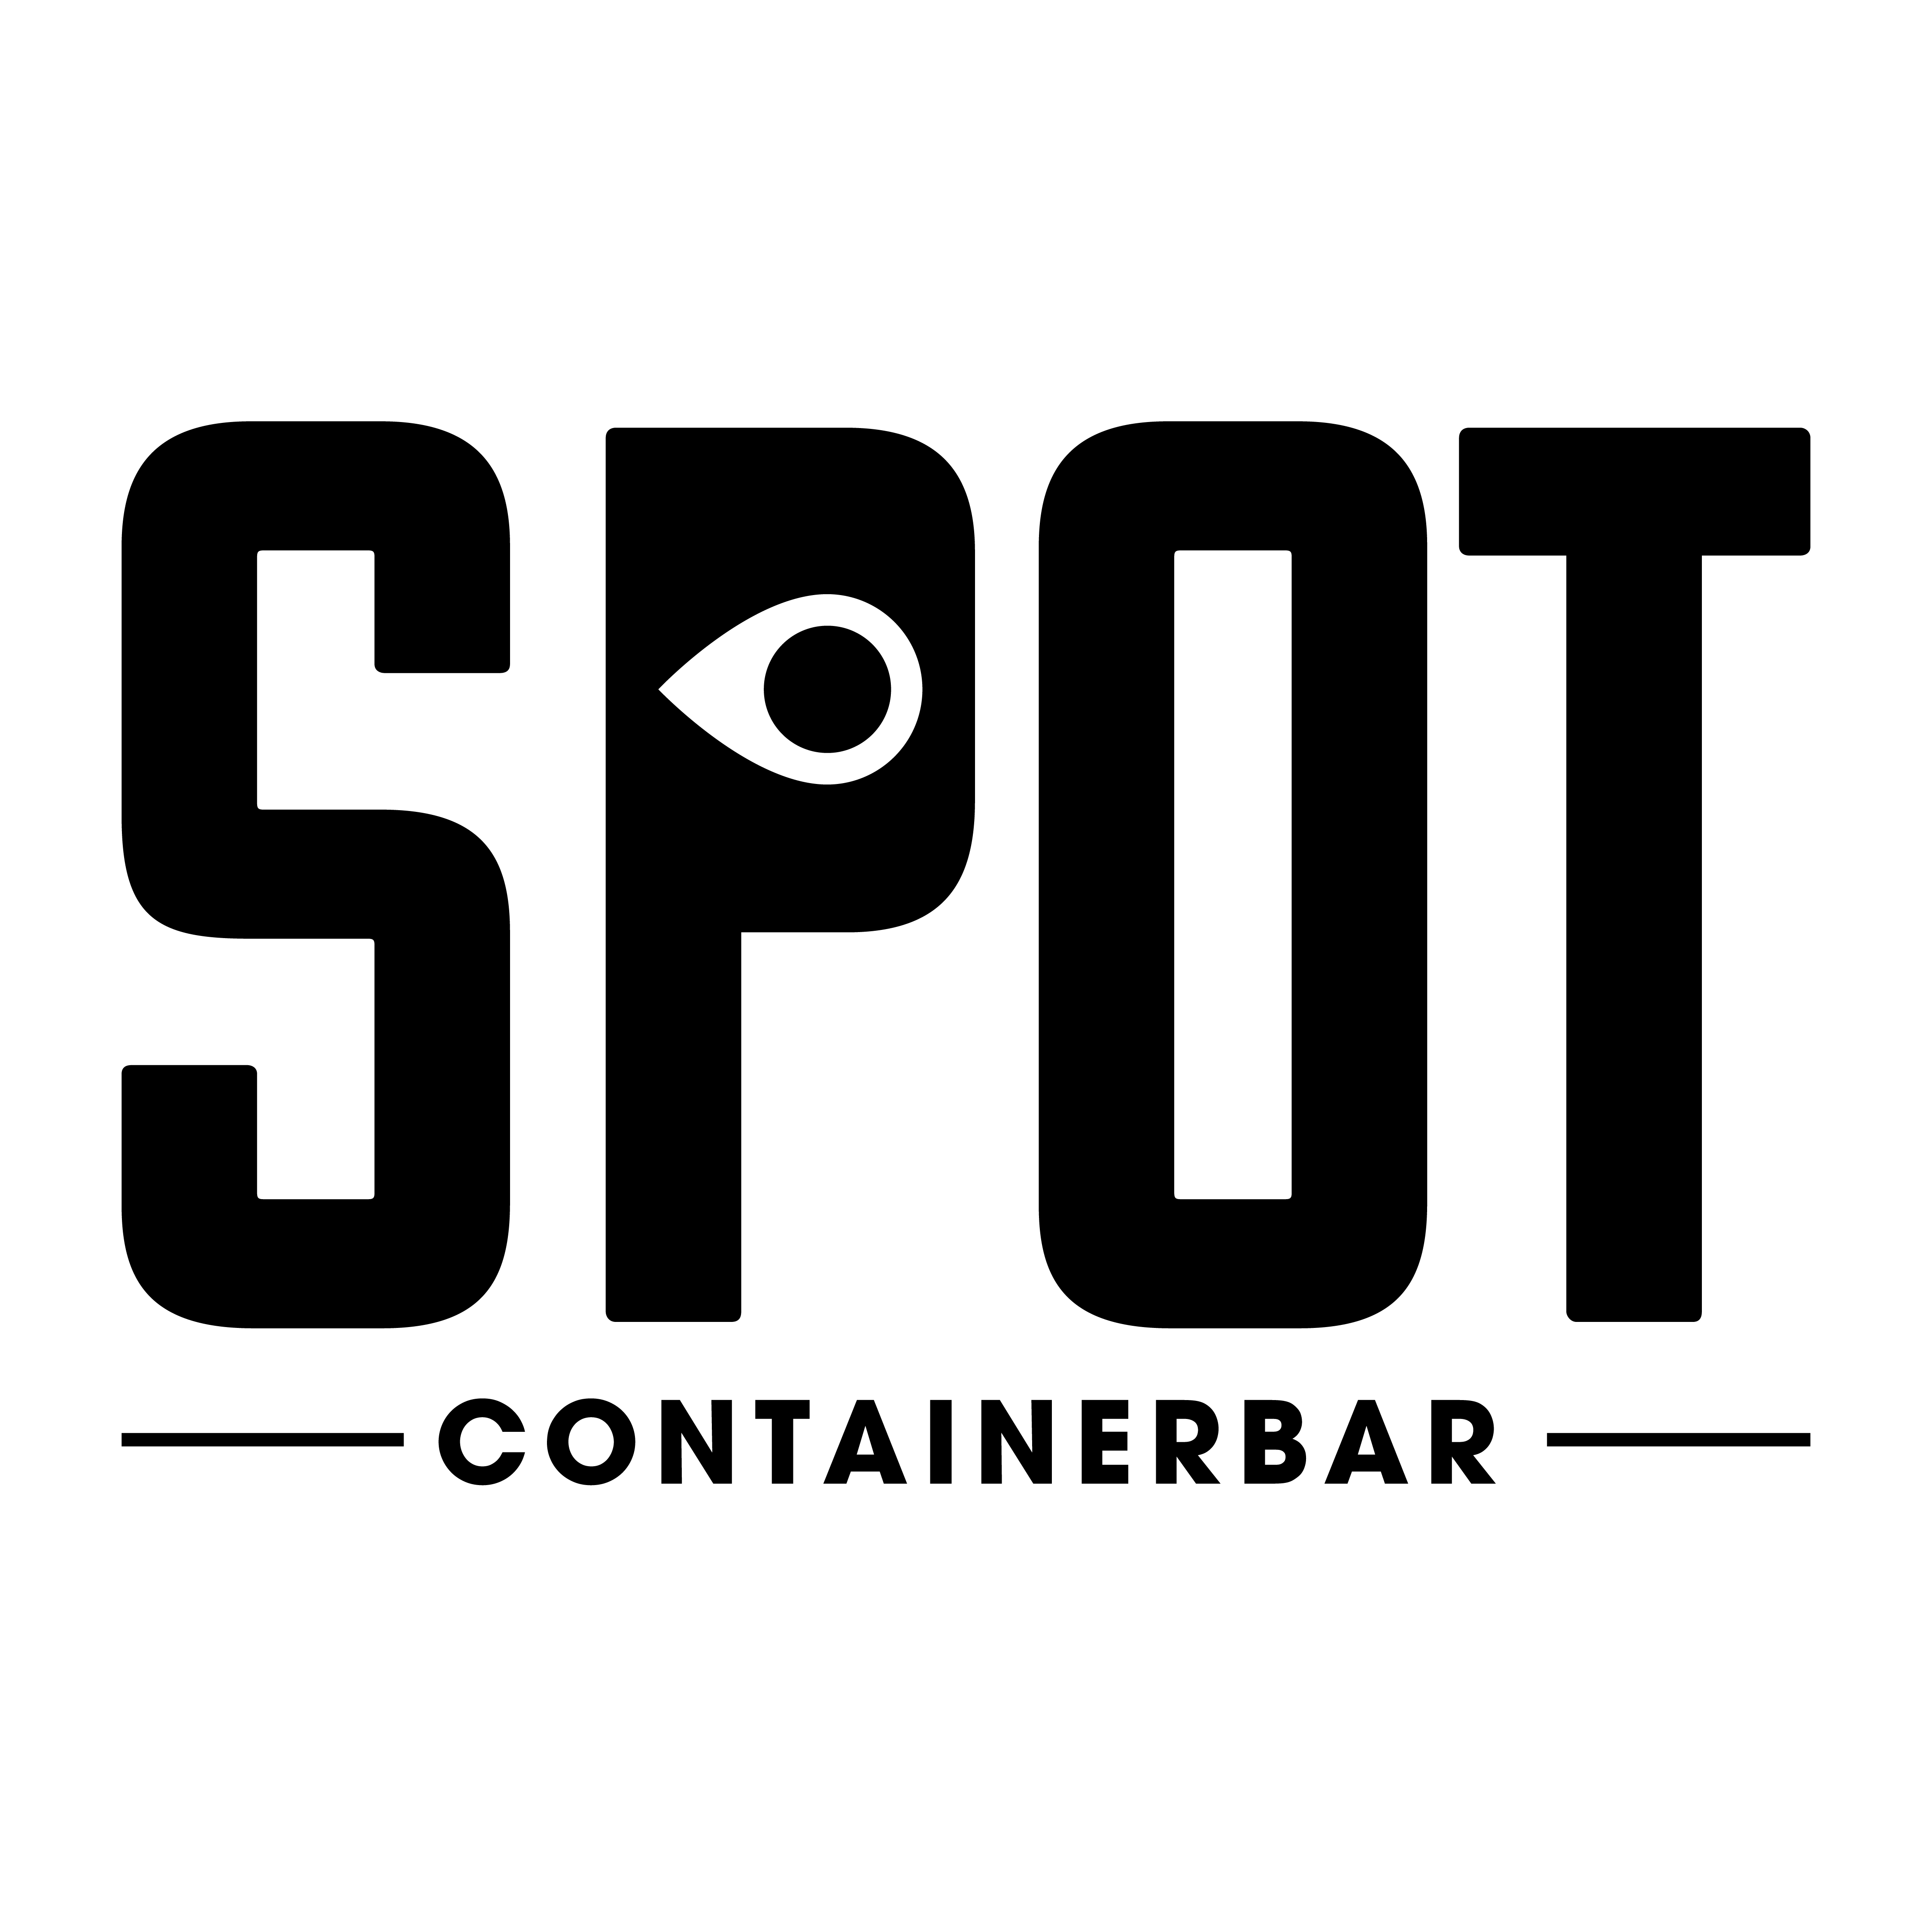 Spot logo single